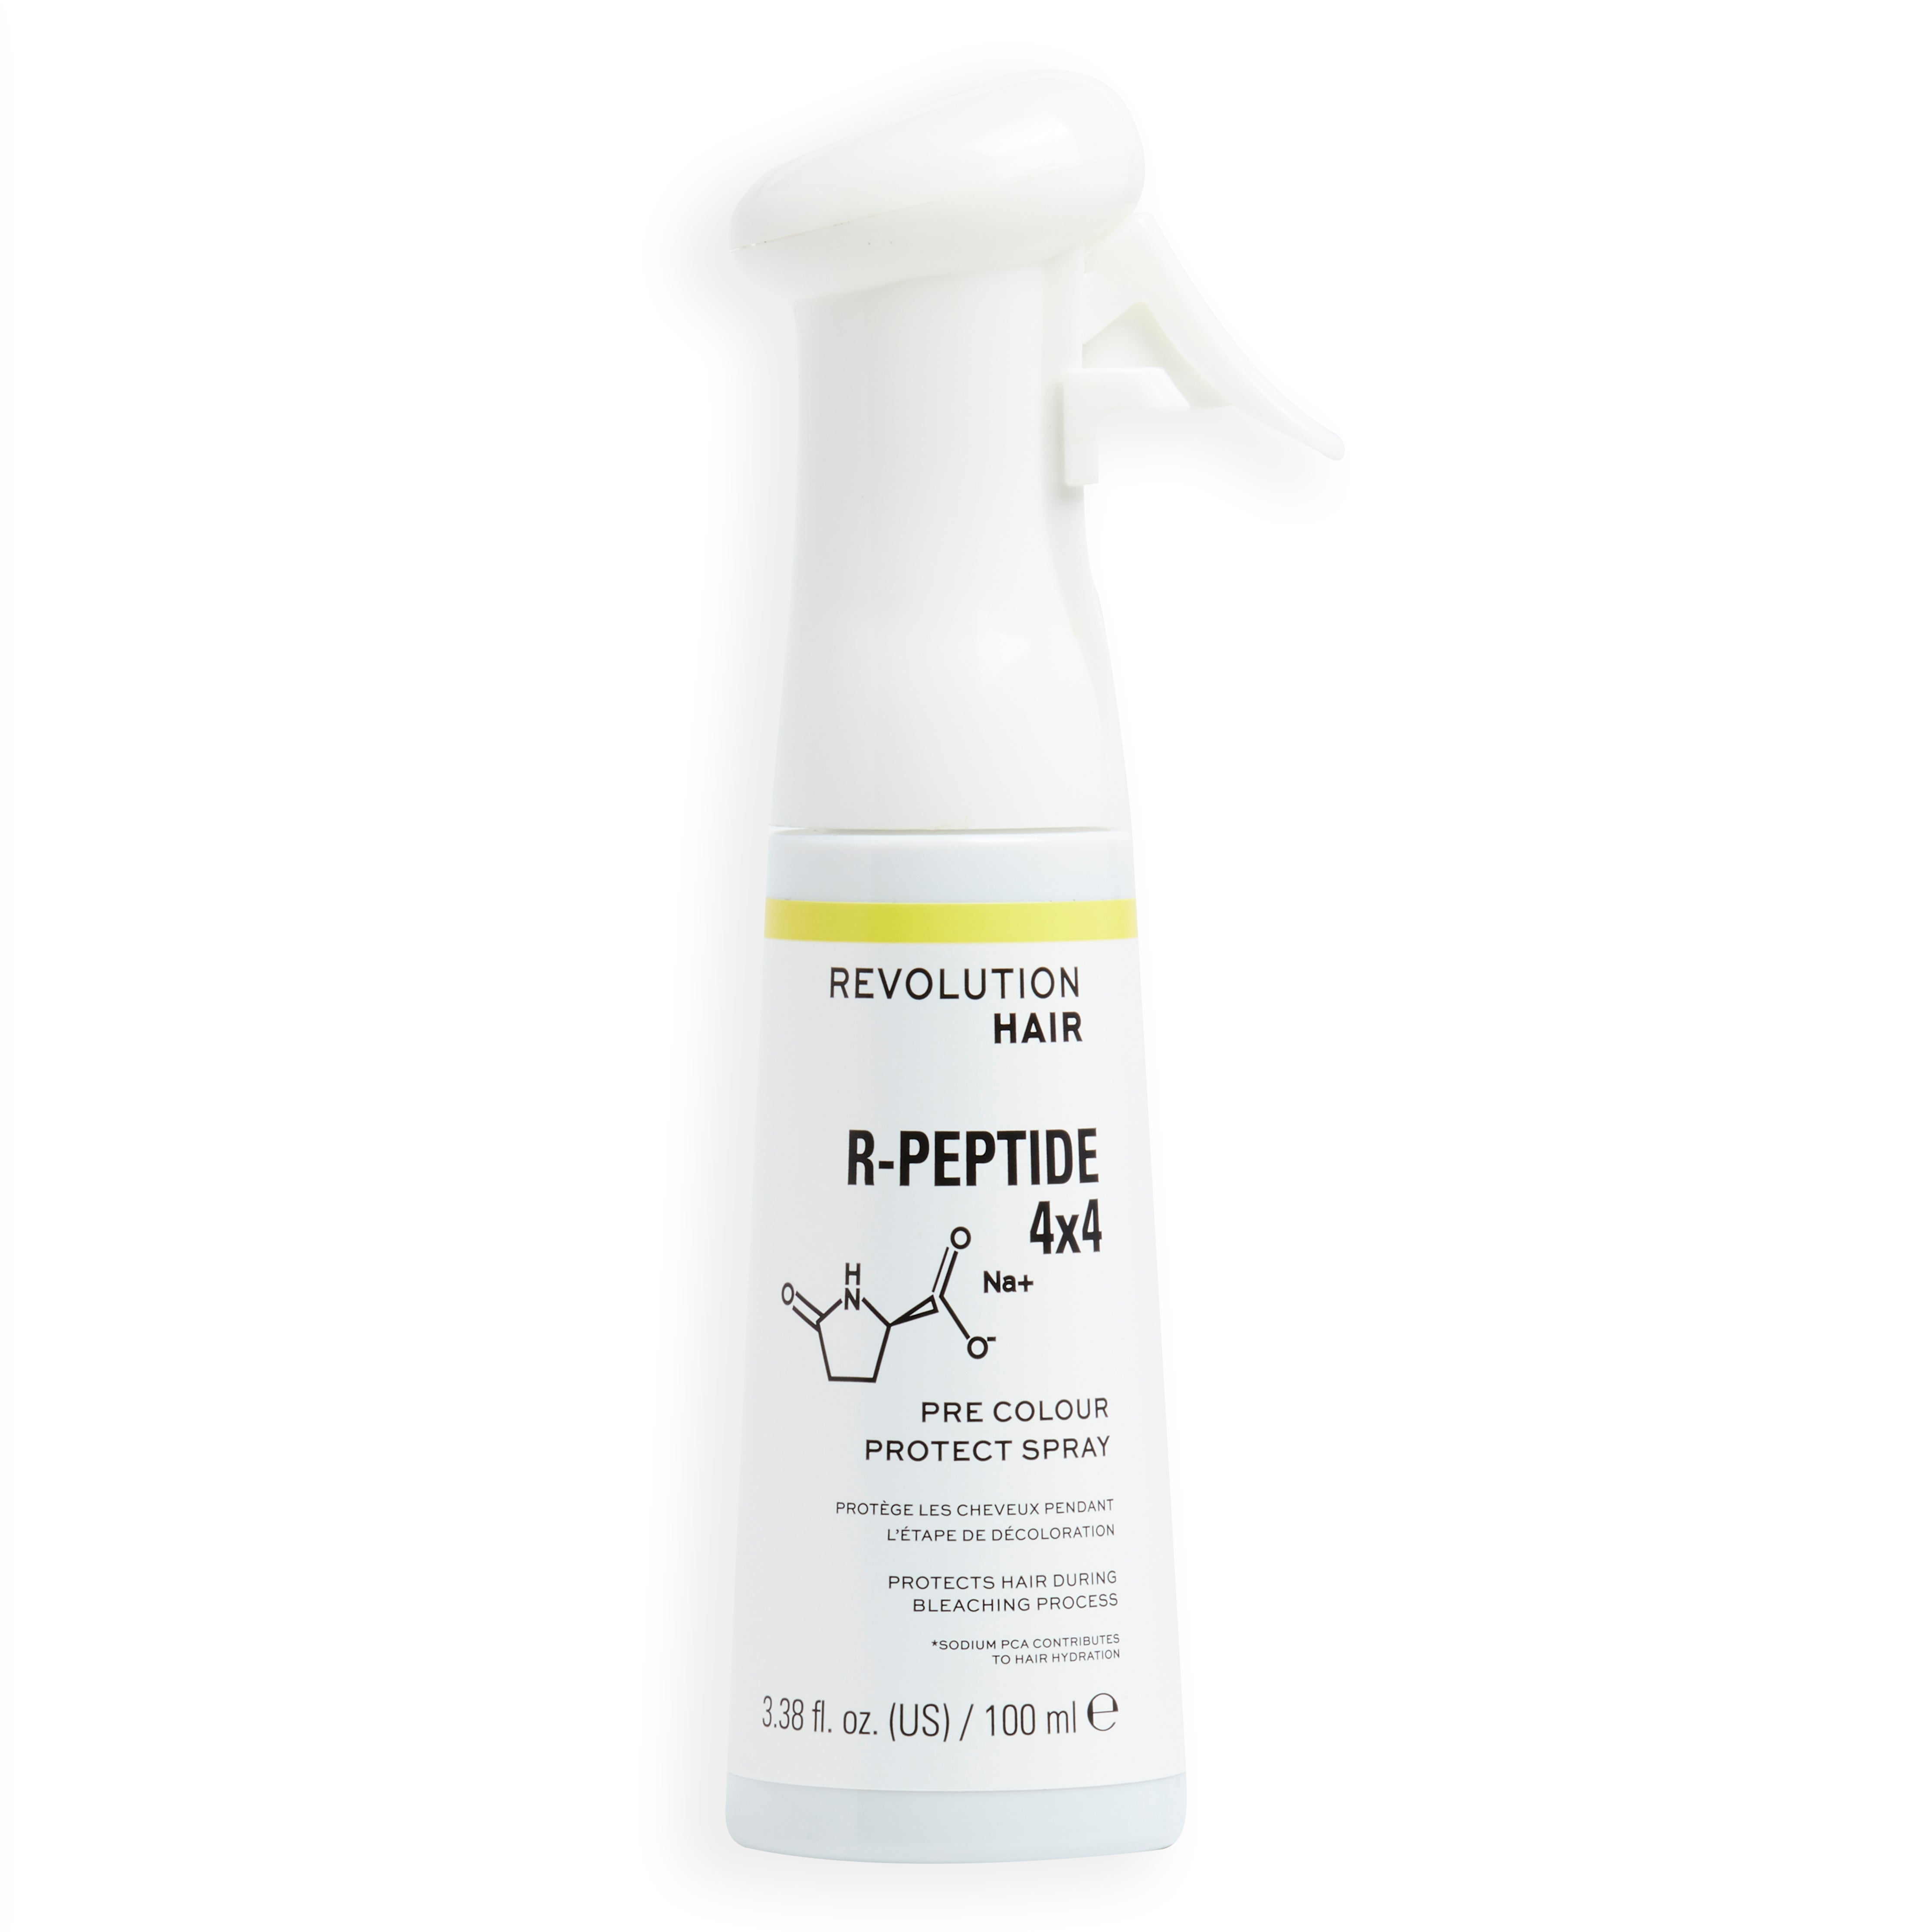 Revolution Hair R-Peptide 4x4 Protect Spray